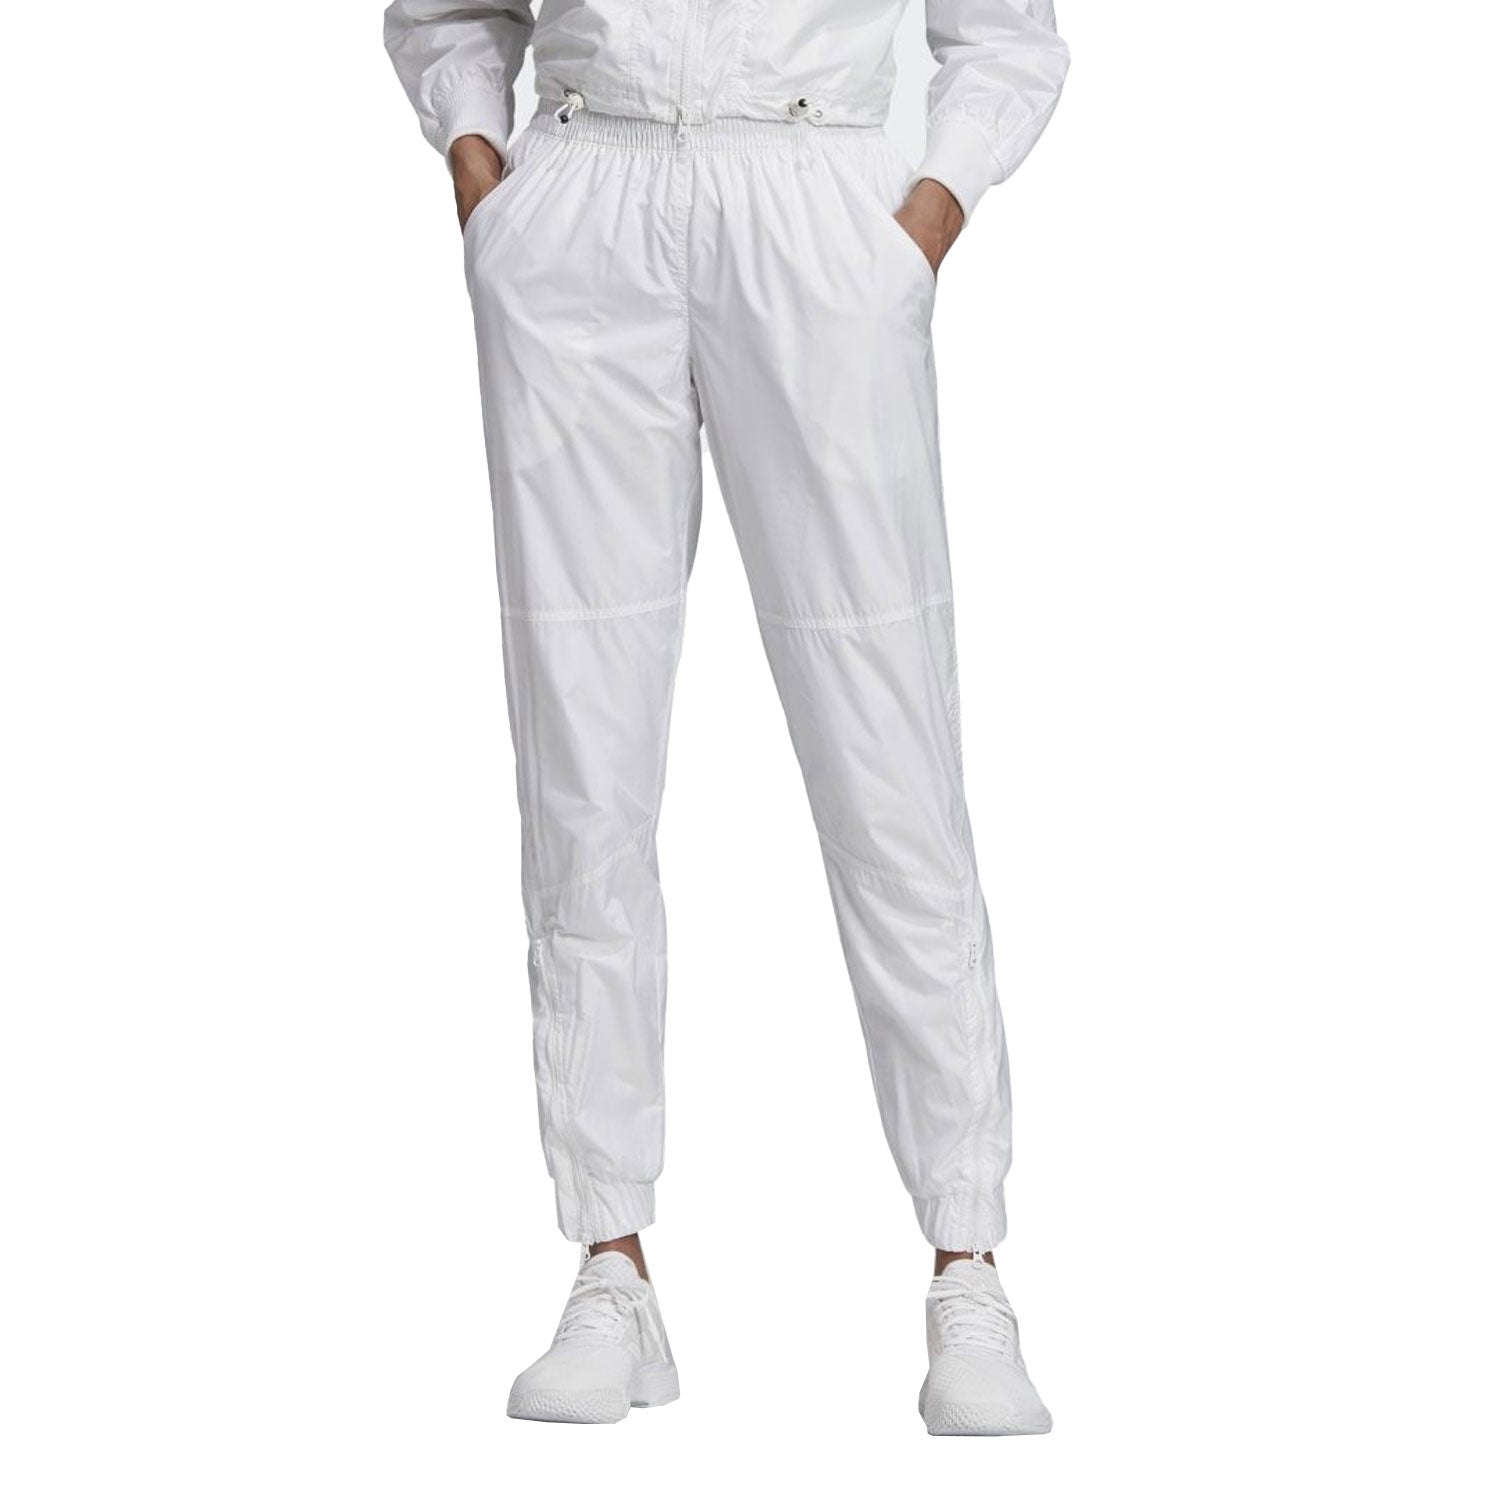 Adidas Womens Tennis Pants - White 